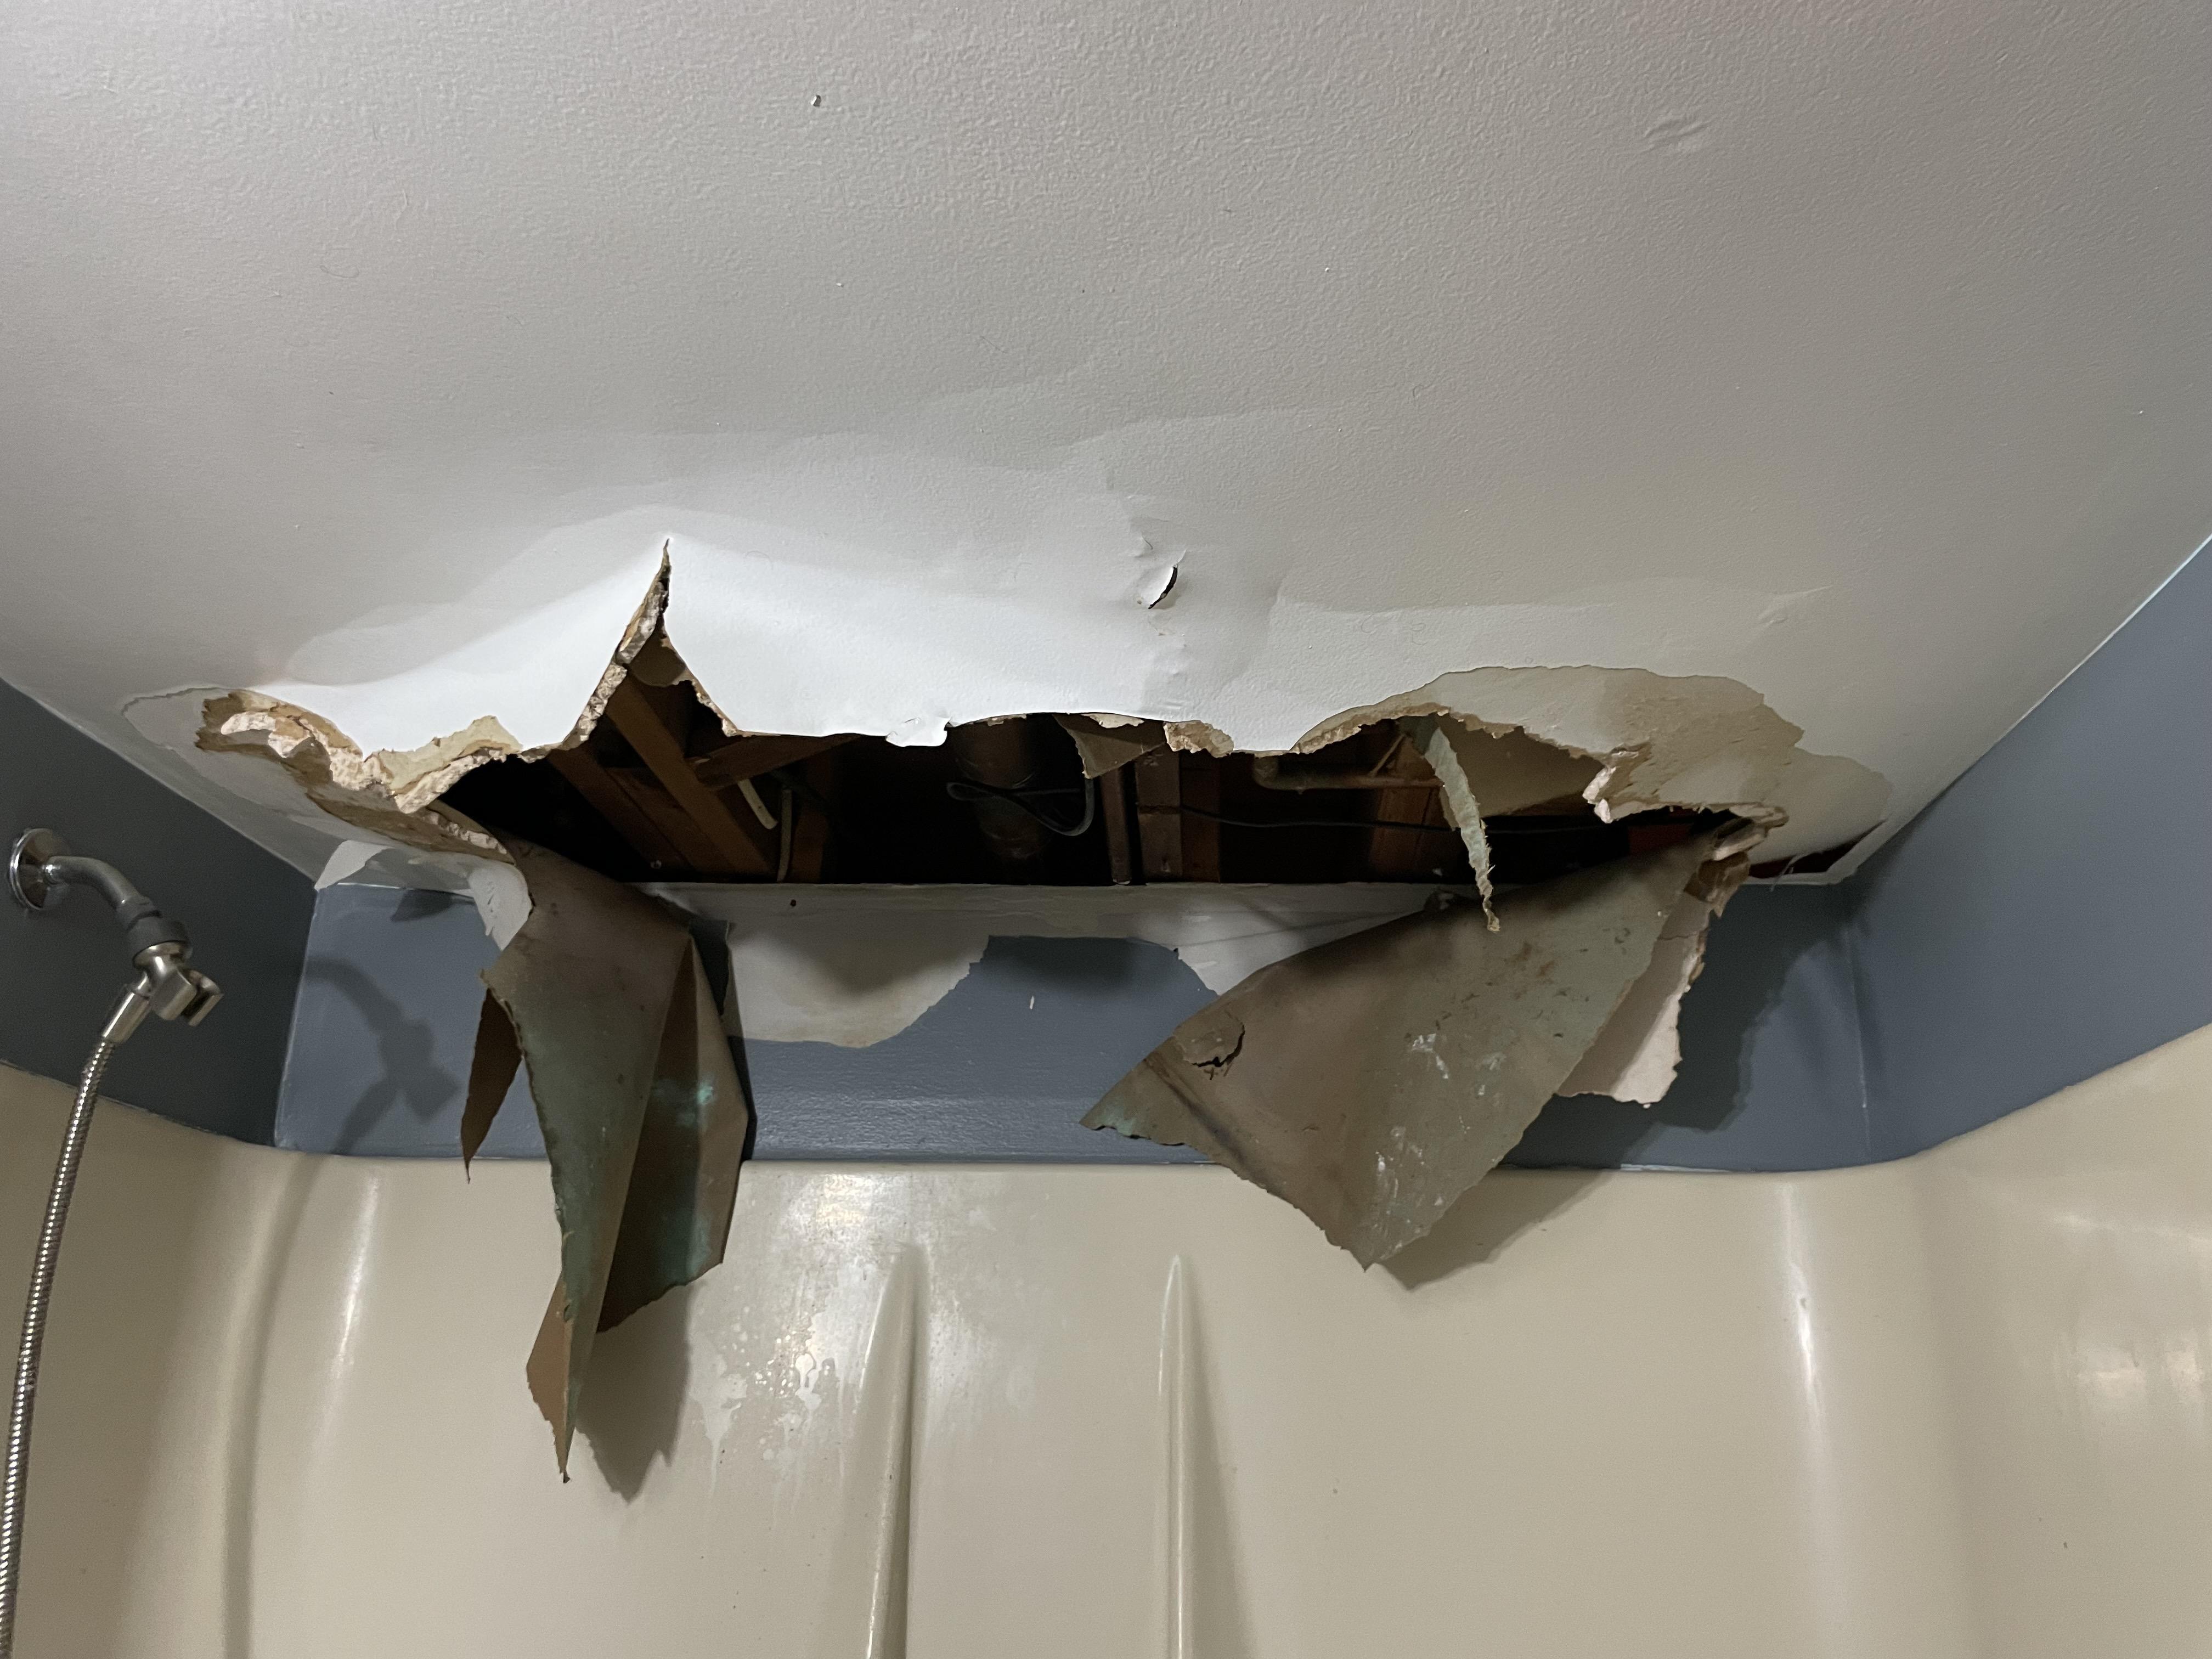 Toilet leak leads to full bathroom demolition in Bridgeport, CT